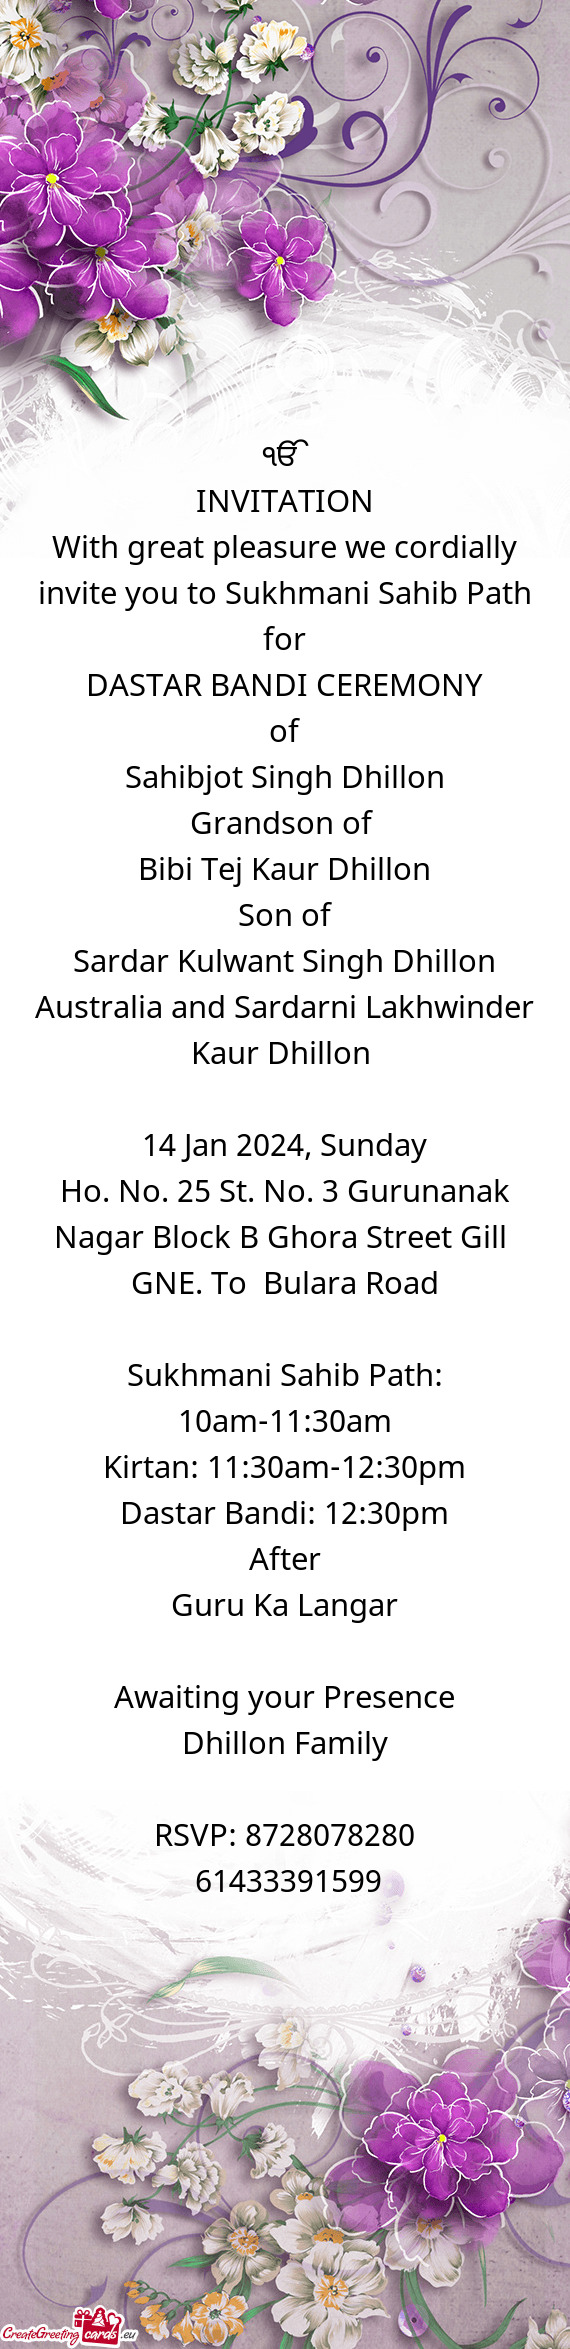 Sardar Kulwant Singh Dhillon Australia and Sardarni Lakhwinder Kaur Dhillon